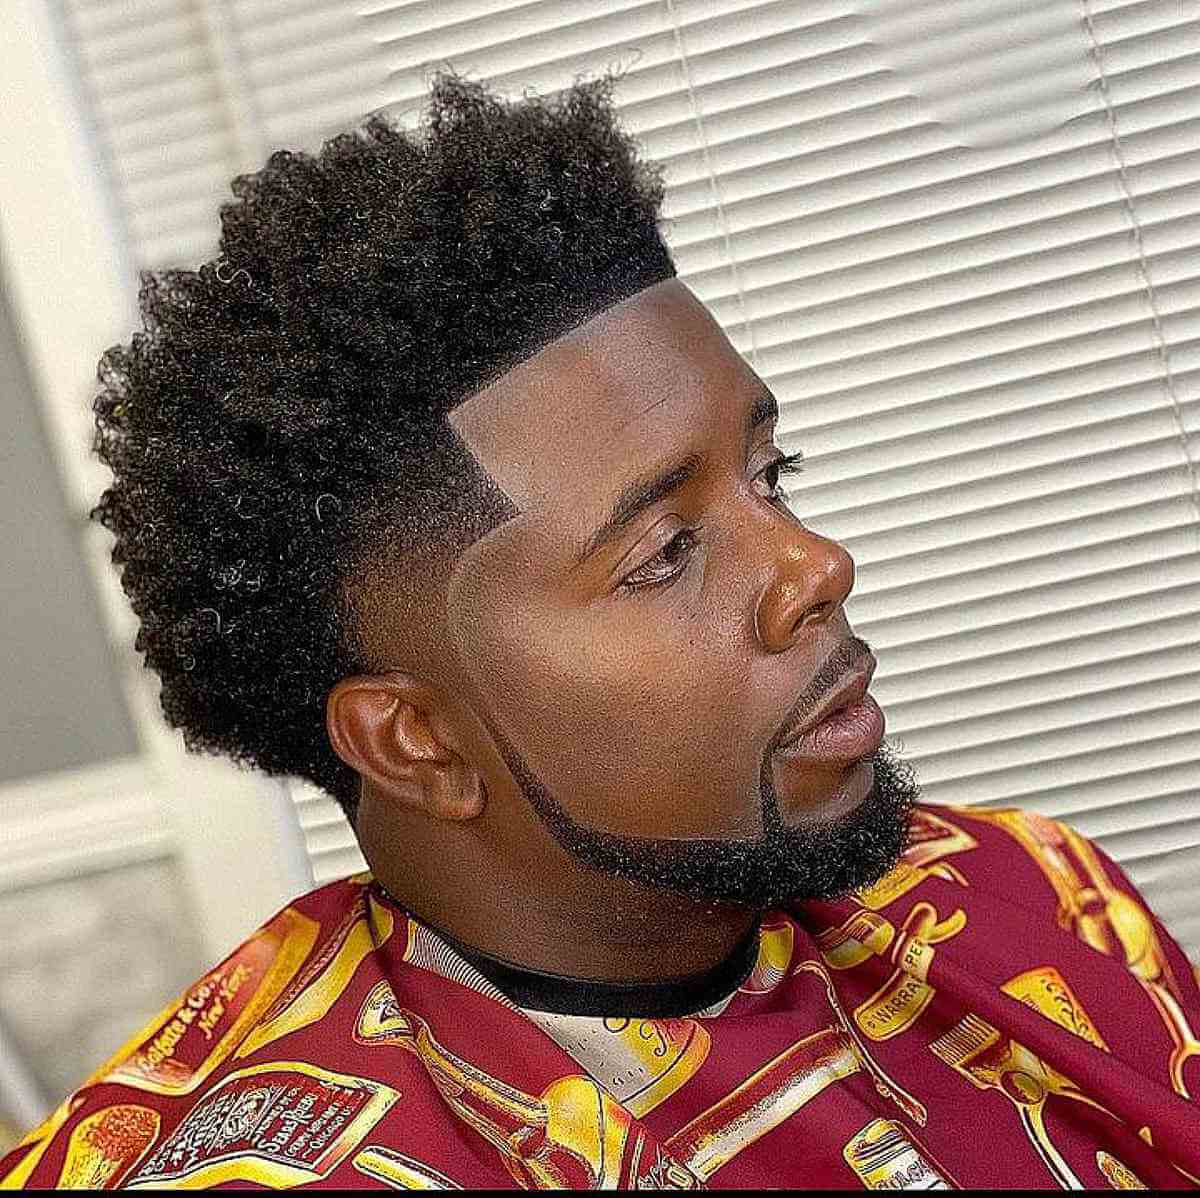 Afro Fade Haircuts